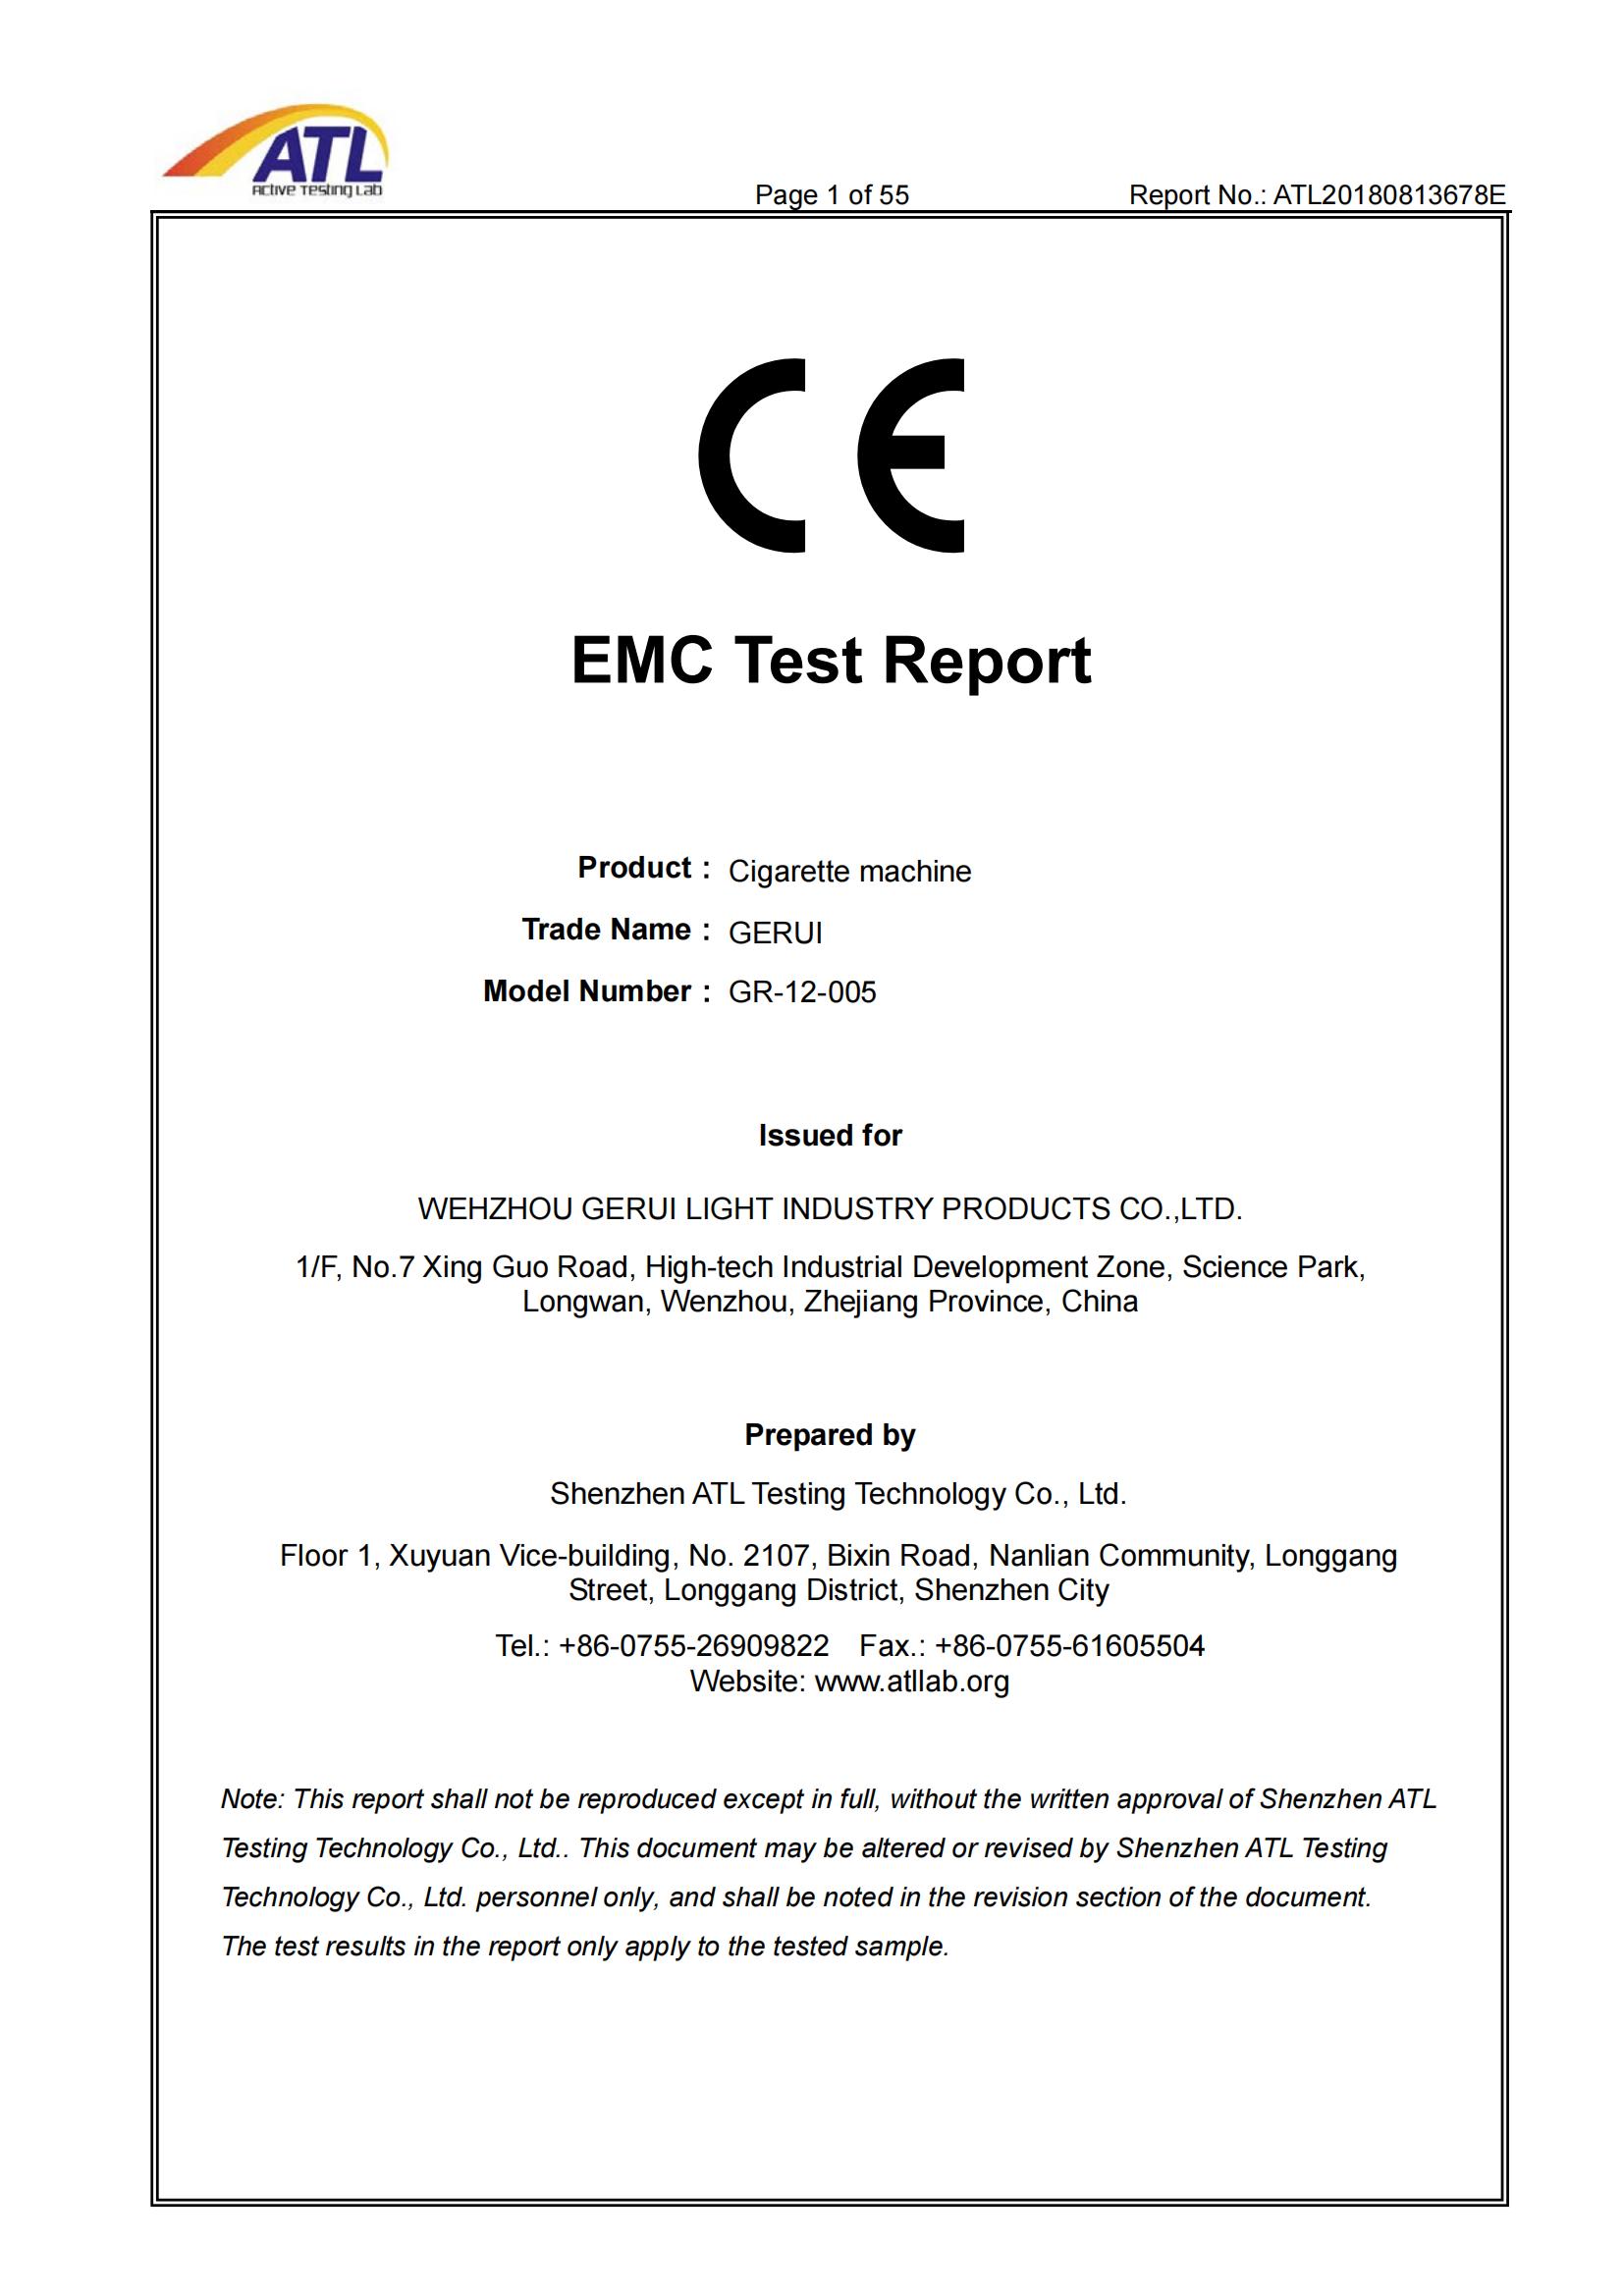 EMC-ATL20180813678E-report_00